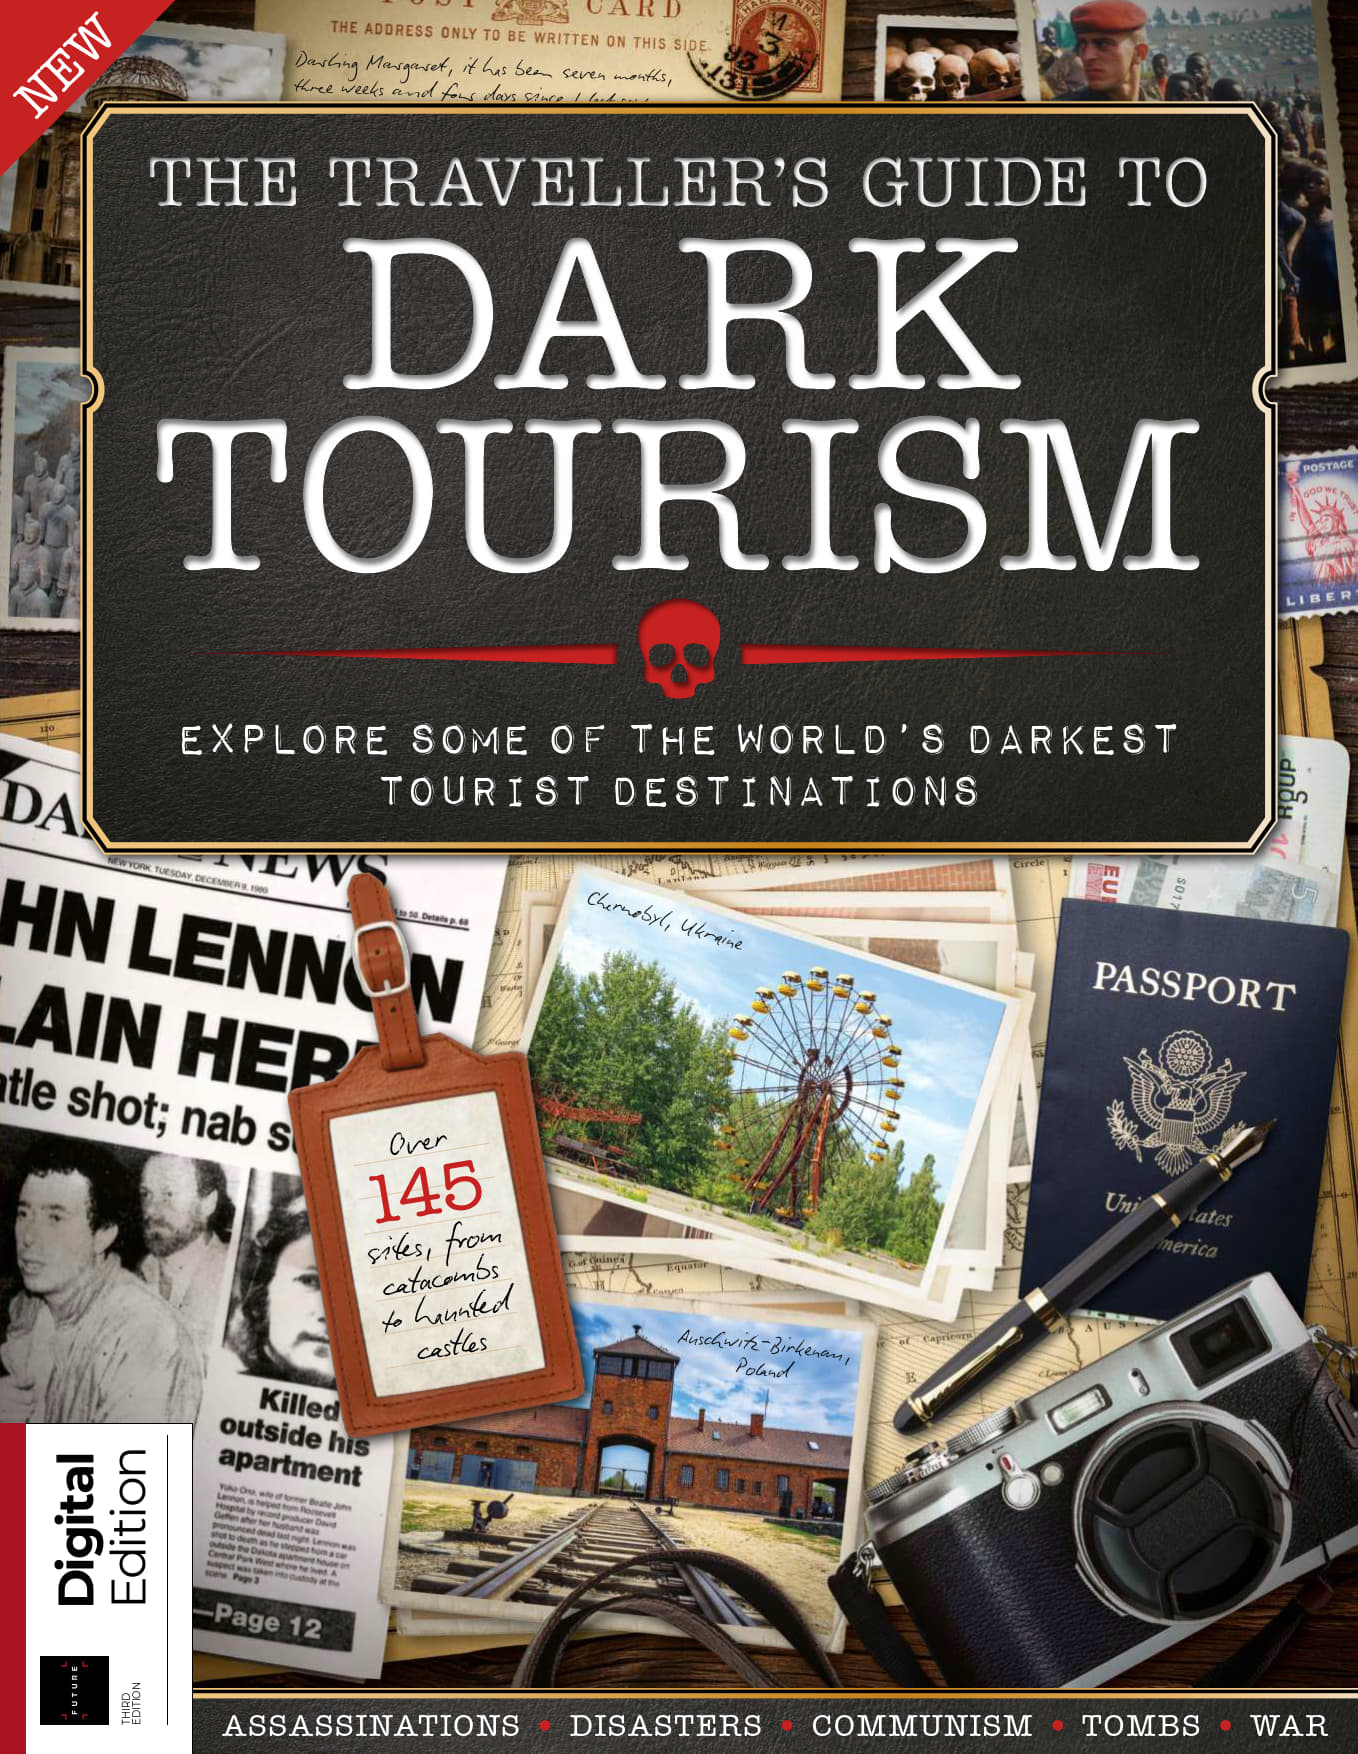 dark tourism bbc 6 minute english